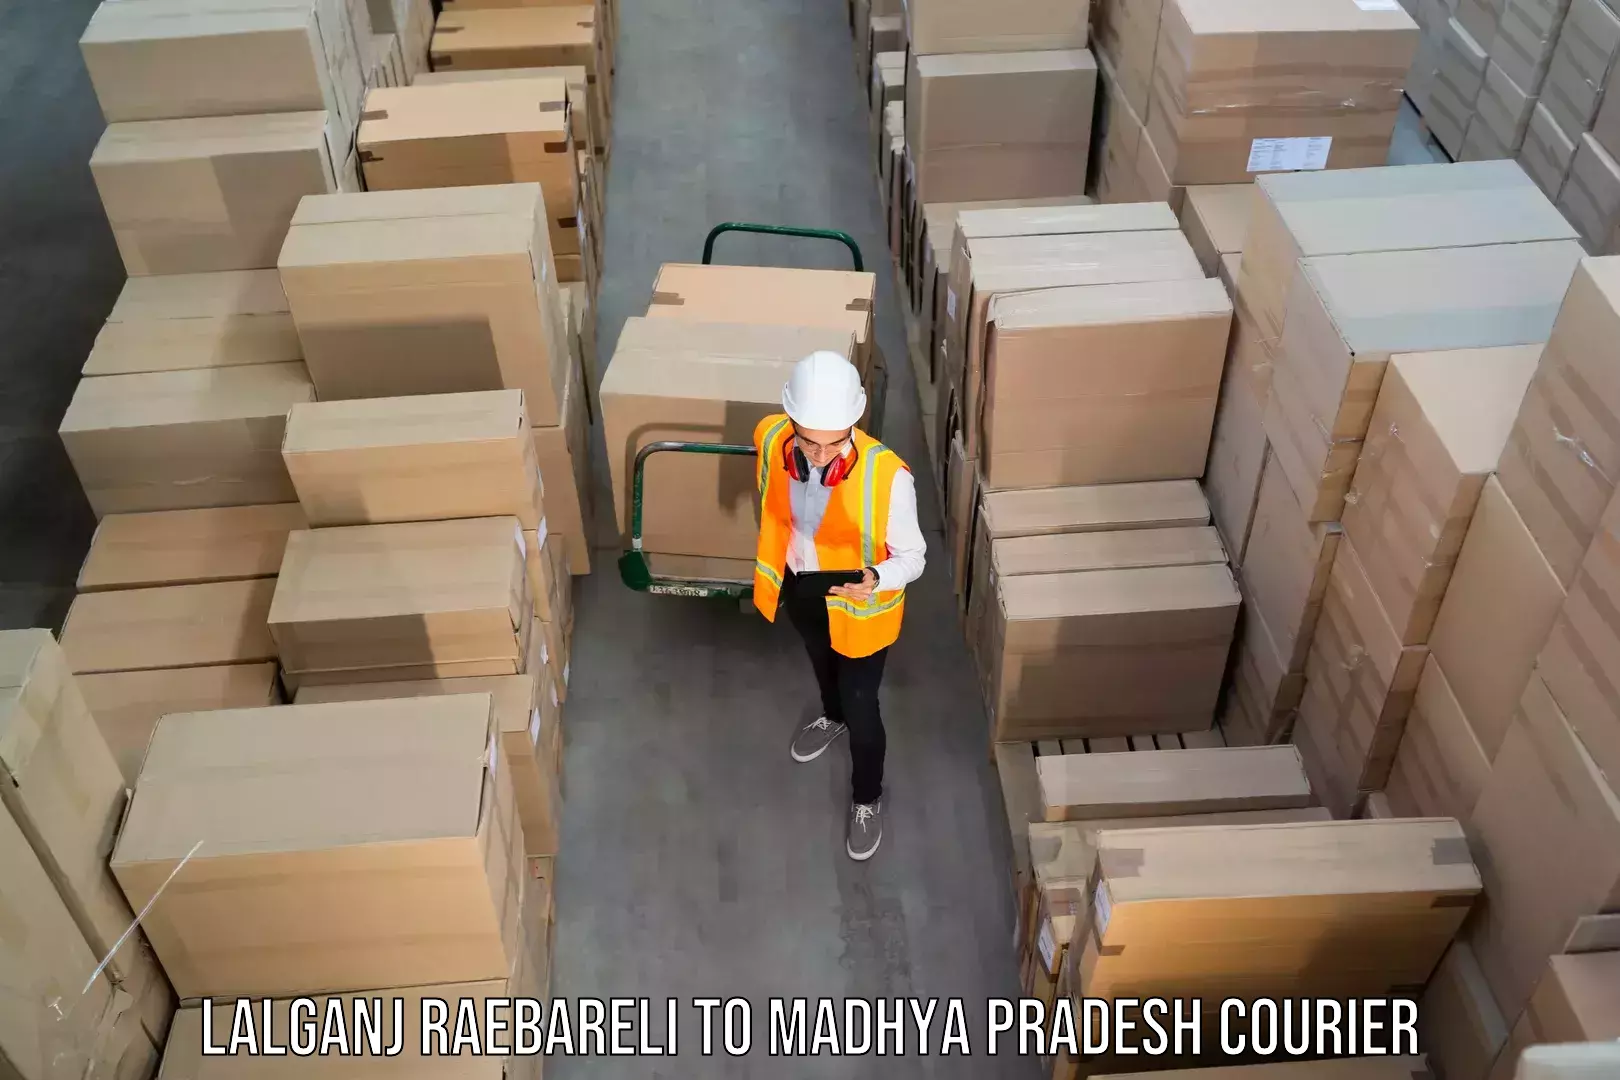 On-call courier service Lalganj Raebareli to Rampur Baghelan